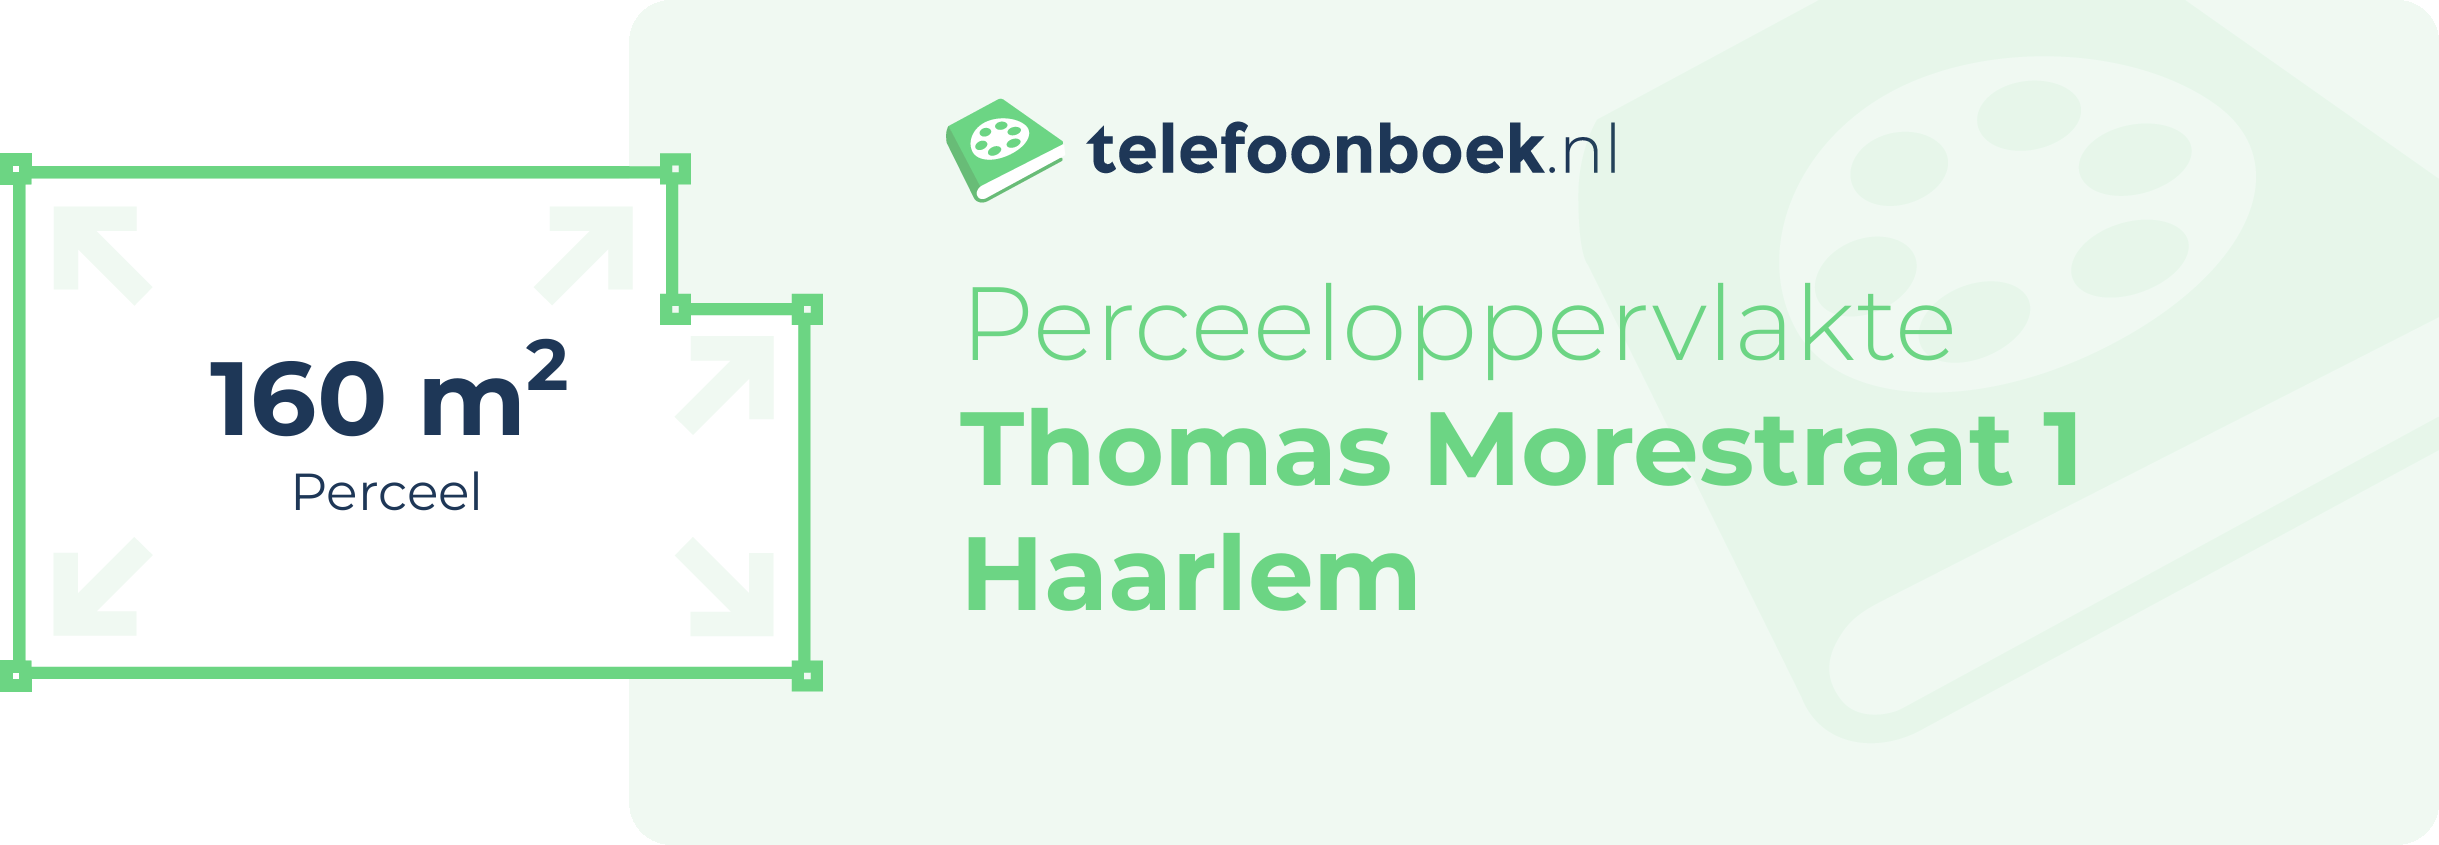 Perceeloppervlakte Thomas Morestraat 1 Haarlem